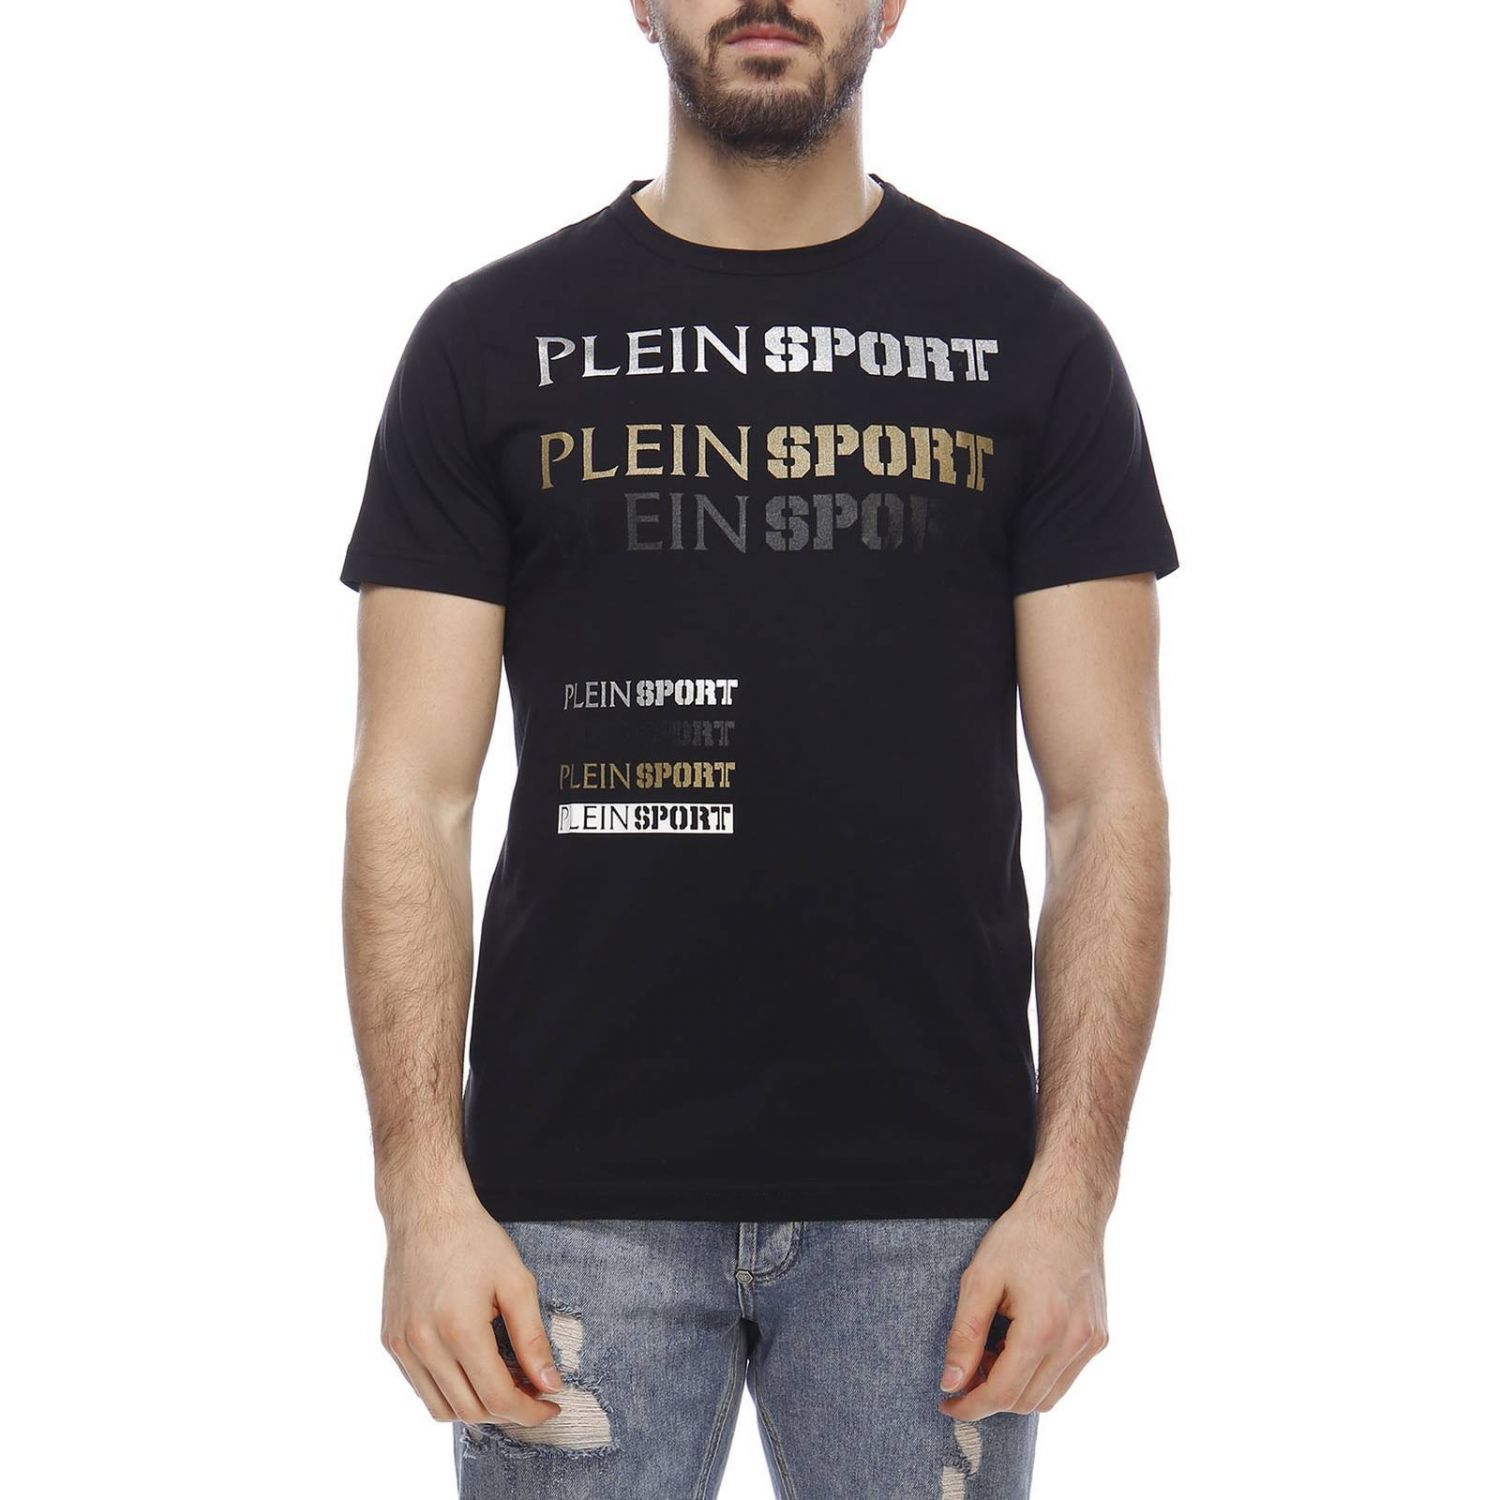 Plein Sport Outlet: t-shirt for men - Black | Plein Sport t-shirt ...